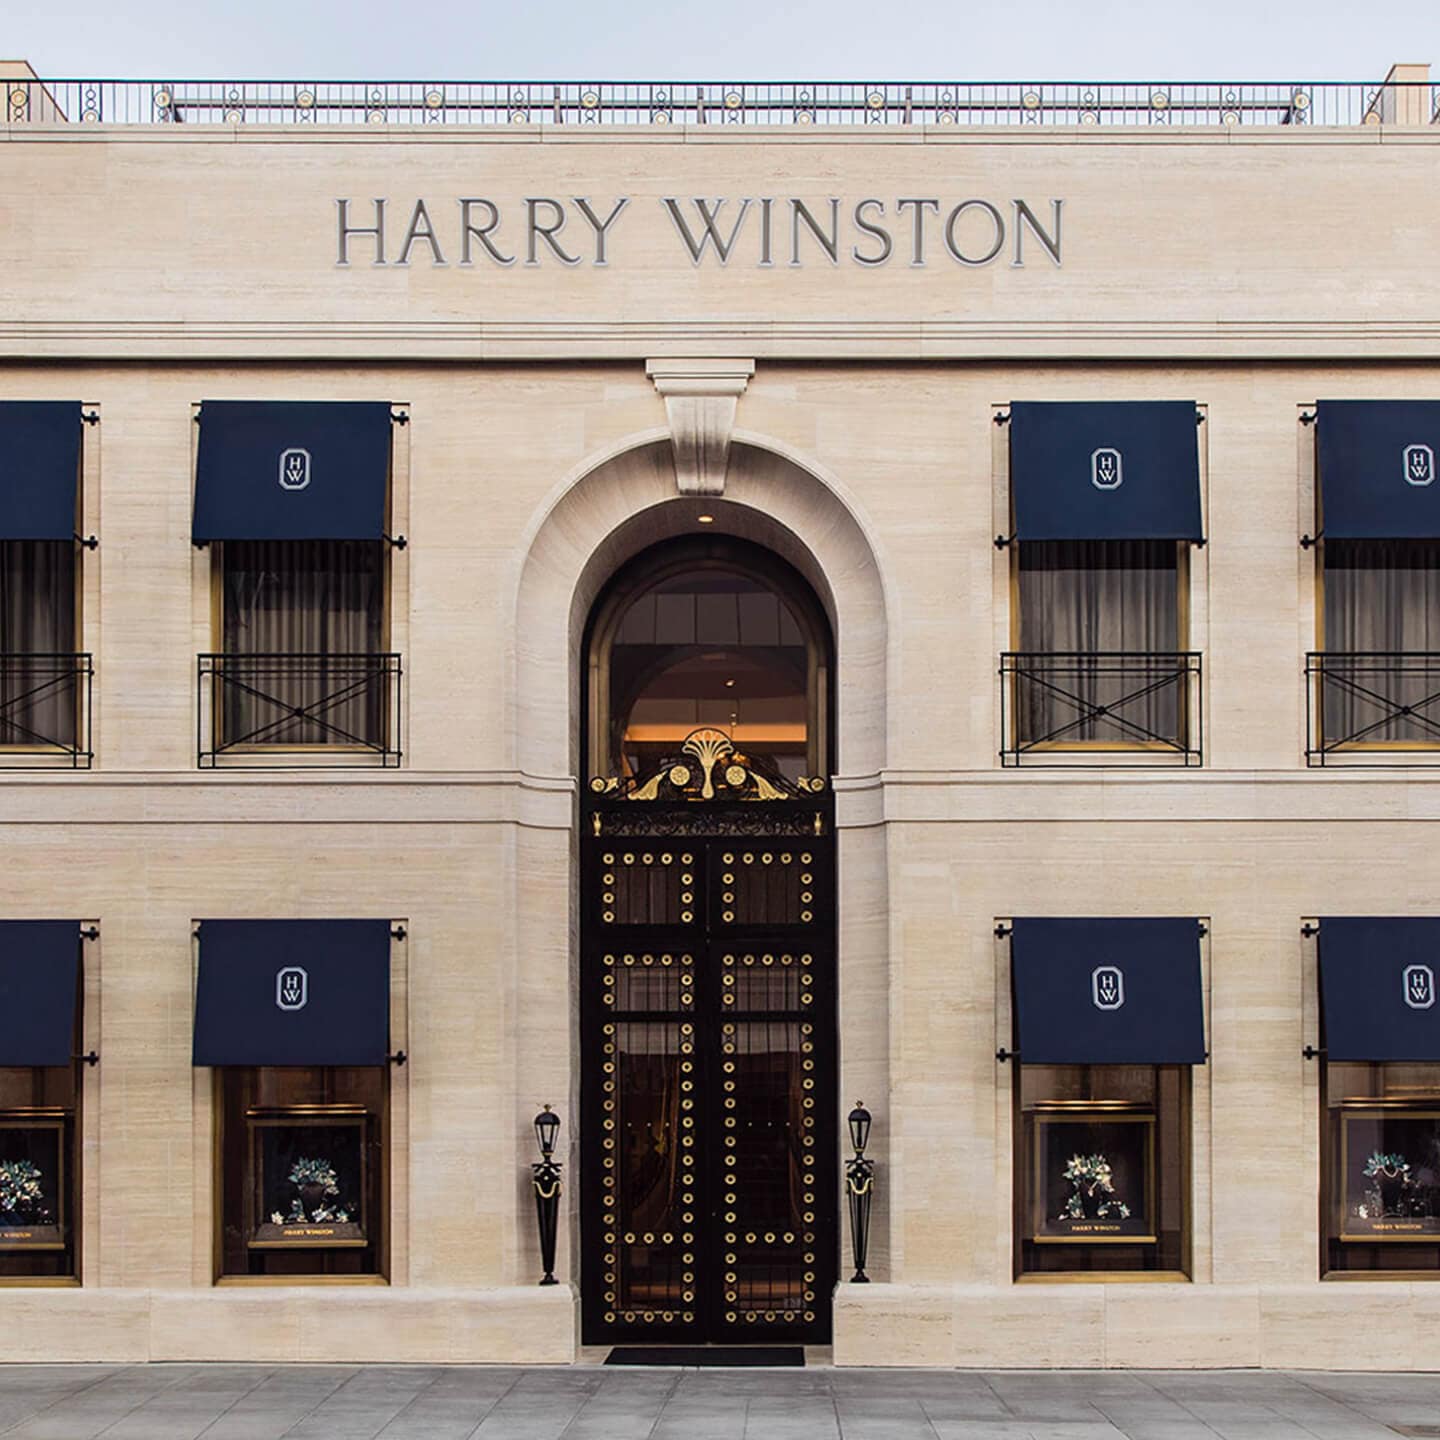 Façade of the Harry Winston Beverly Hills Salon